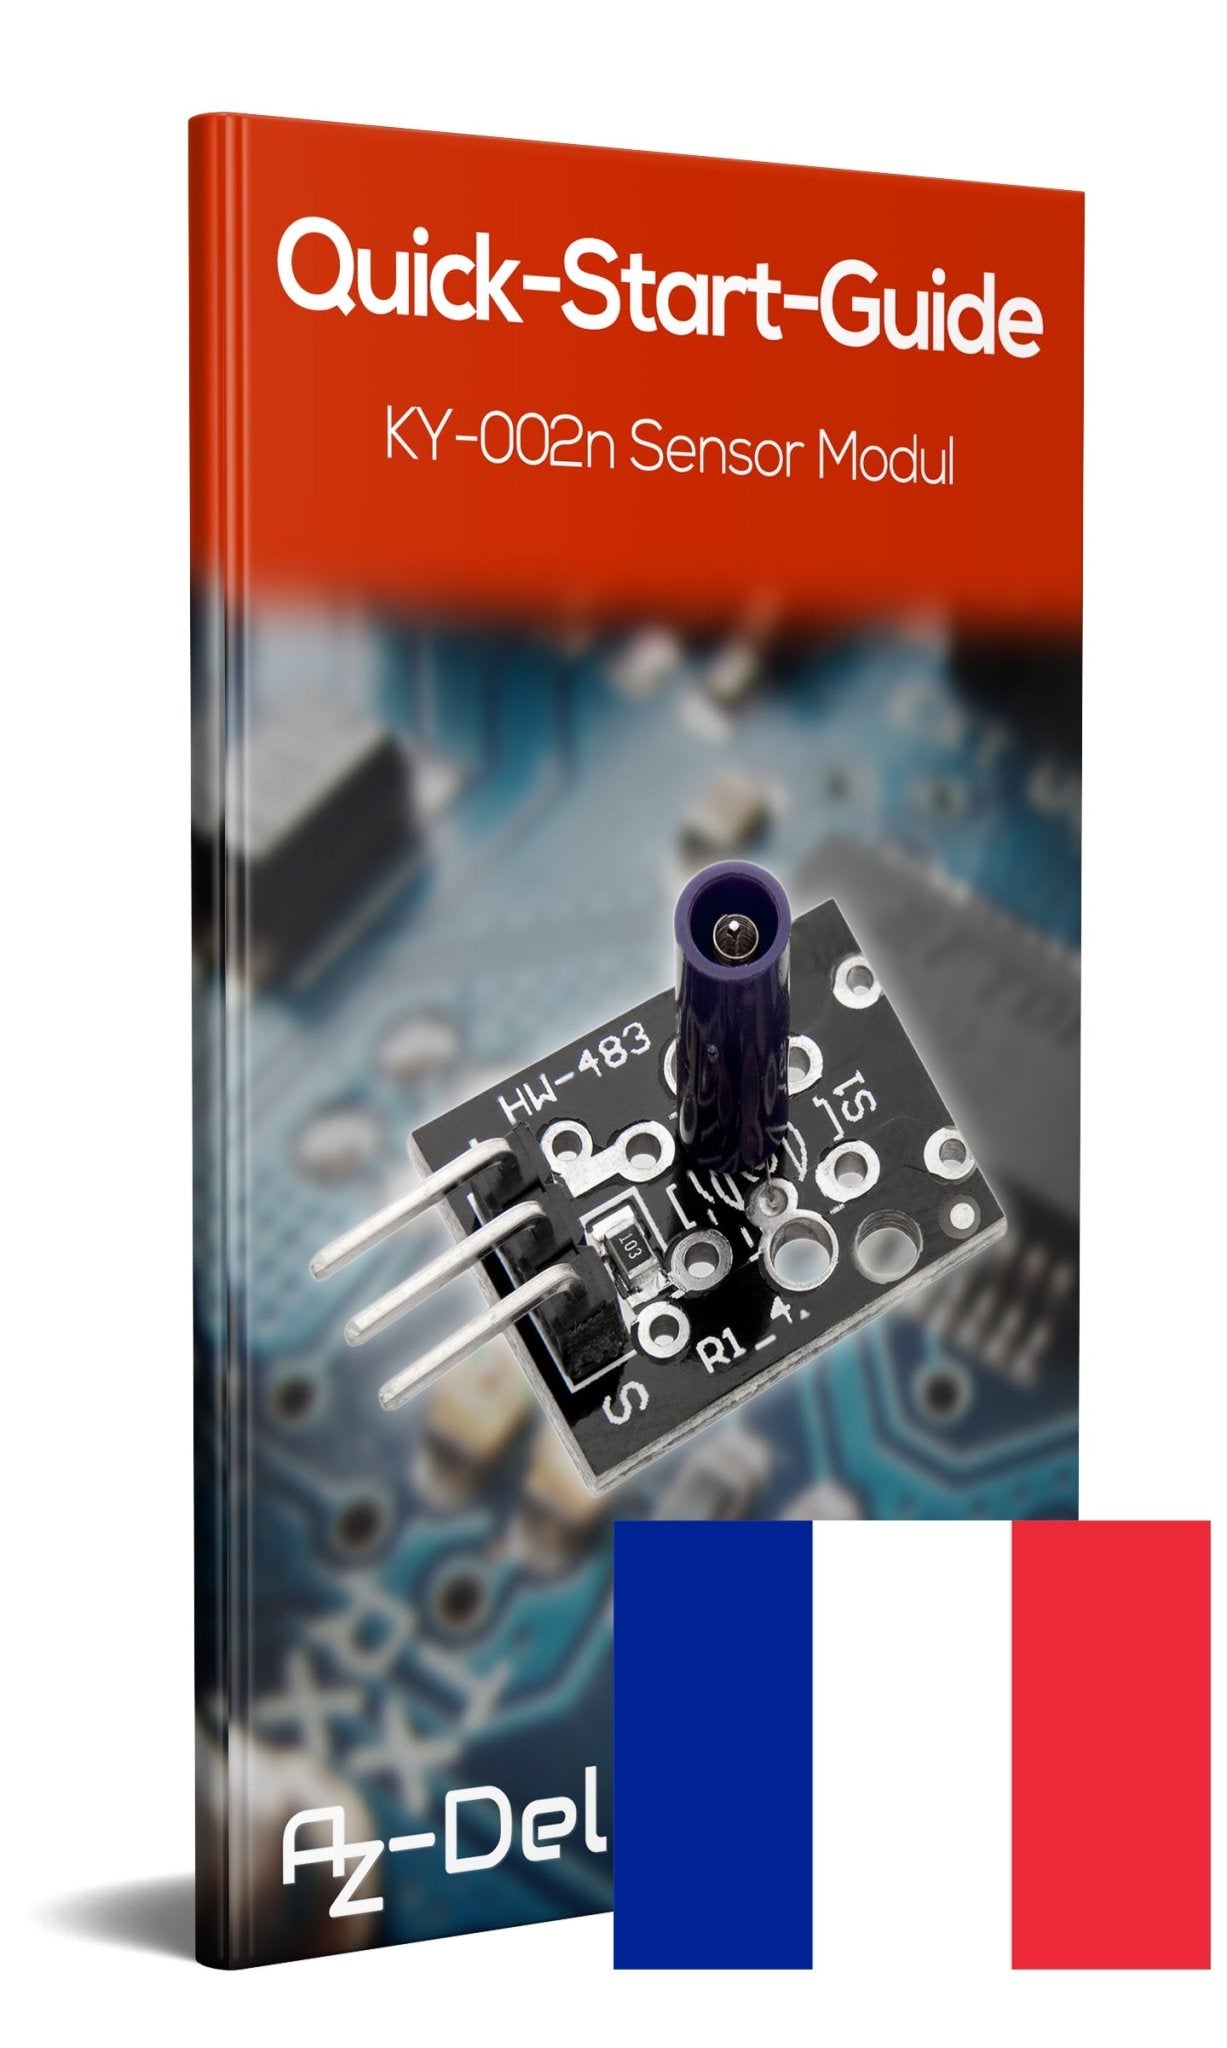 KY-002n Sensor Modul - AZ-Delivery